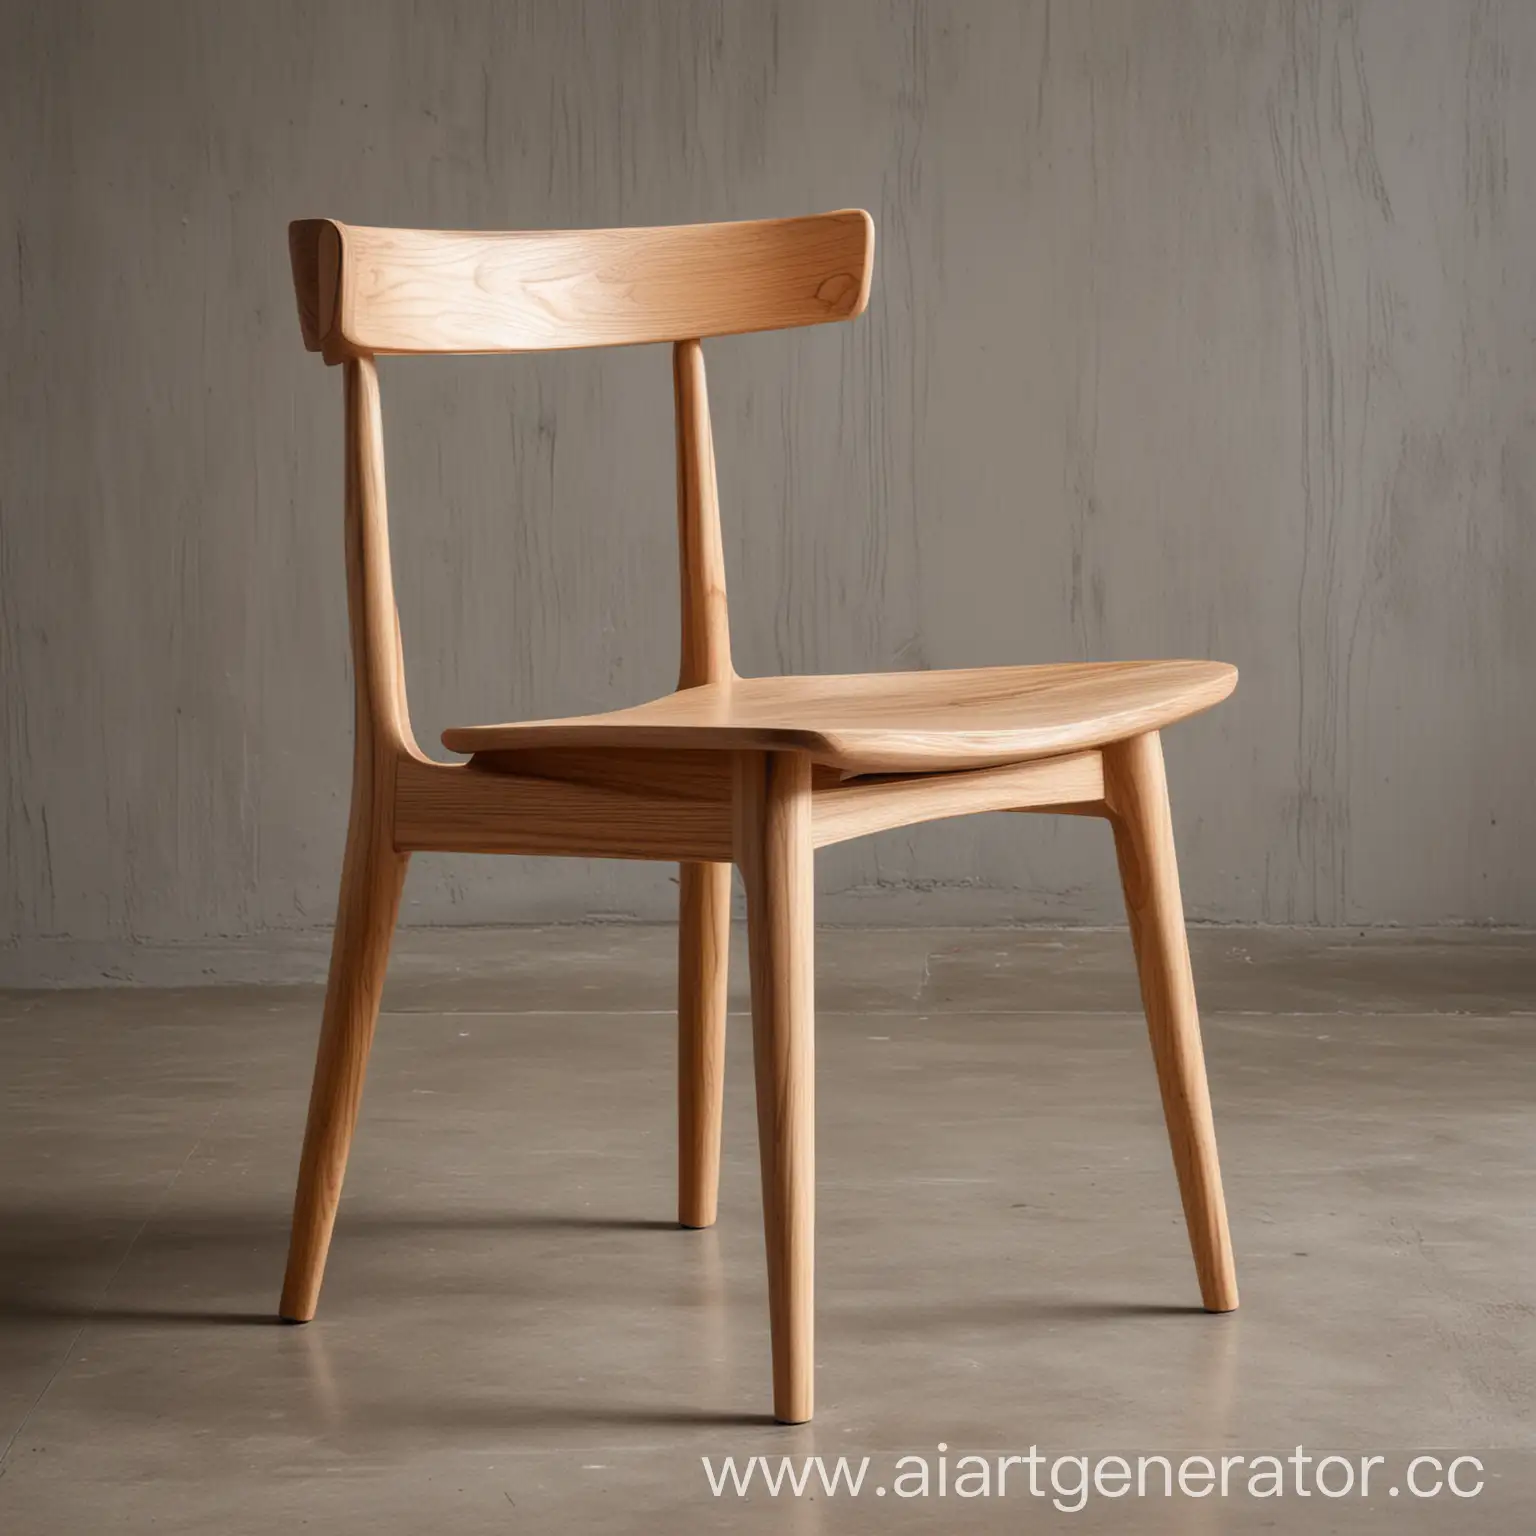  Modern Wooden dining chair